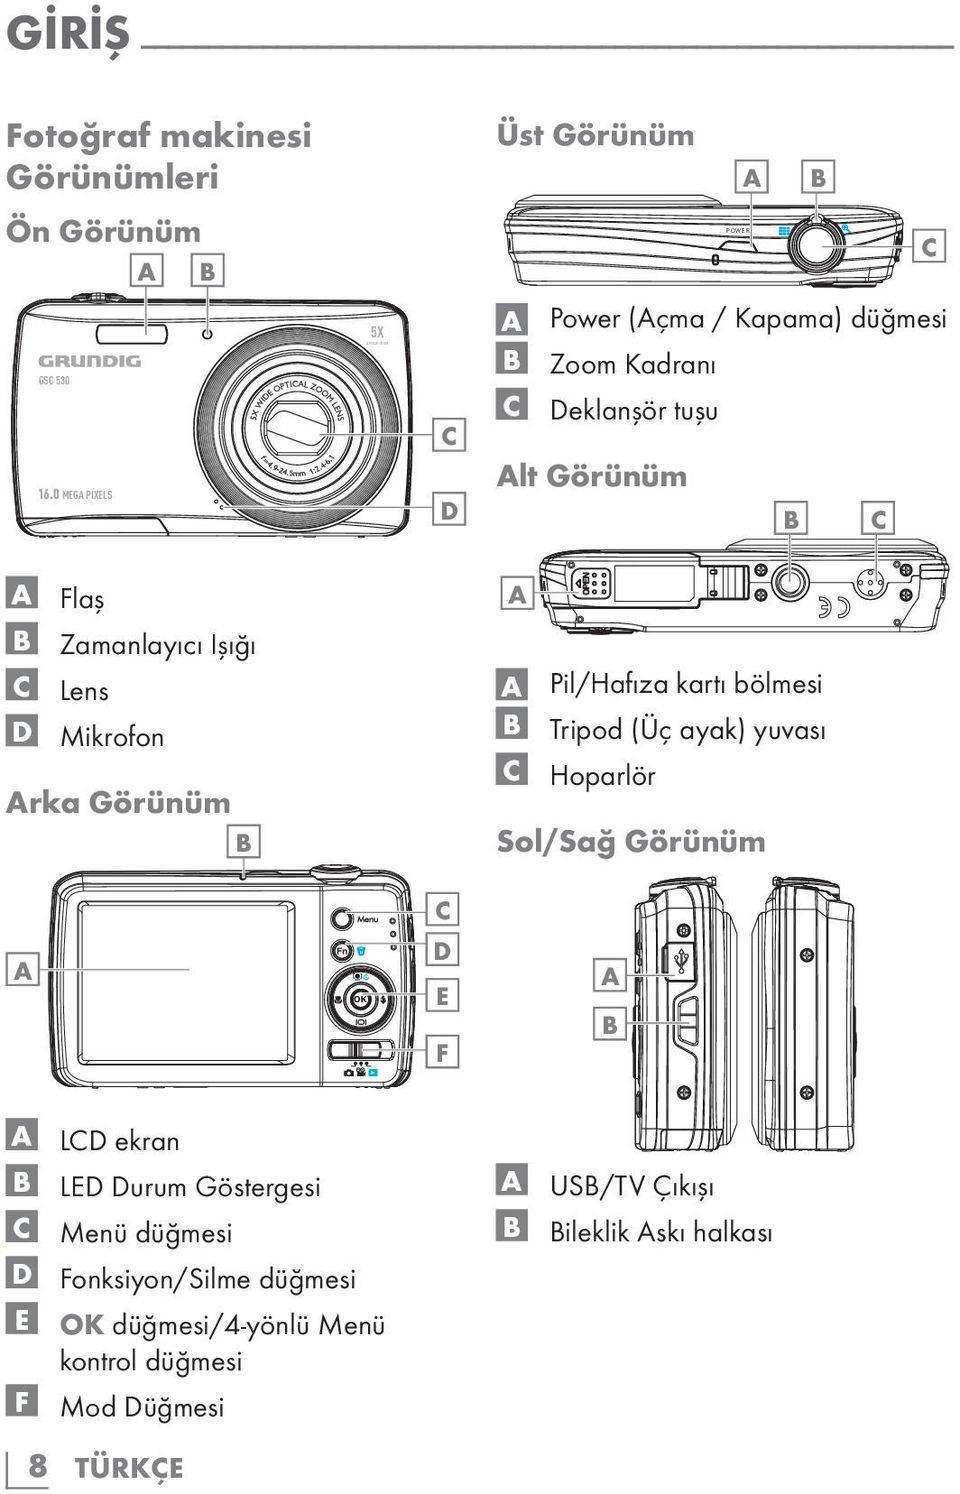 Zamanlayıcı Işığı C Lens D Mikrofon Arka Görünüm B A A Pil/Hafıza kartı bölmesi B Tripod (Üç ayak) yuvası C Hoparlör Sol/Sağ Görünüm